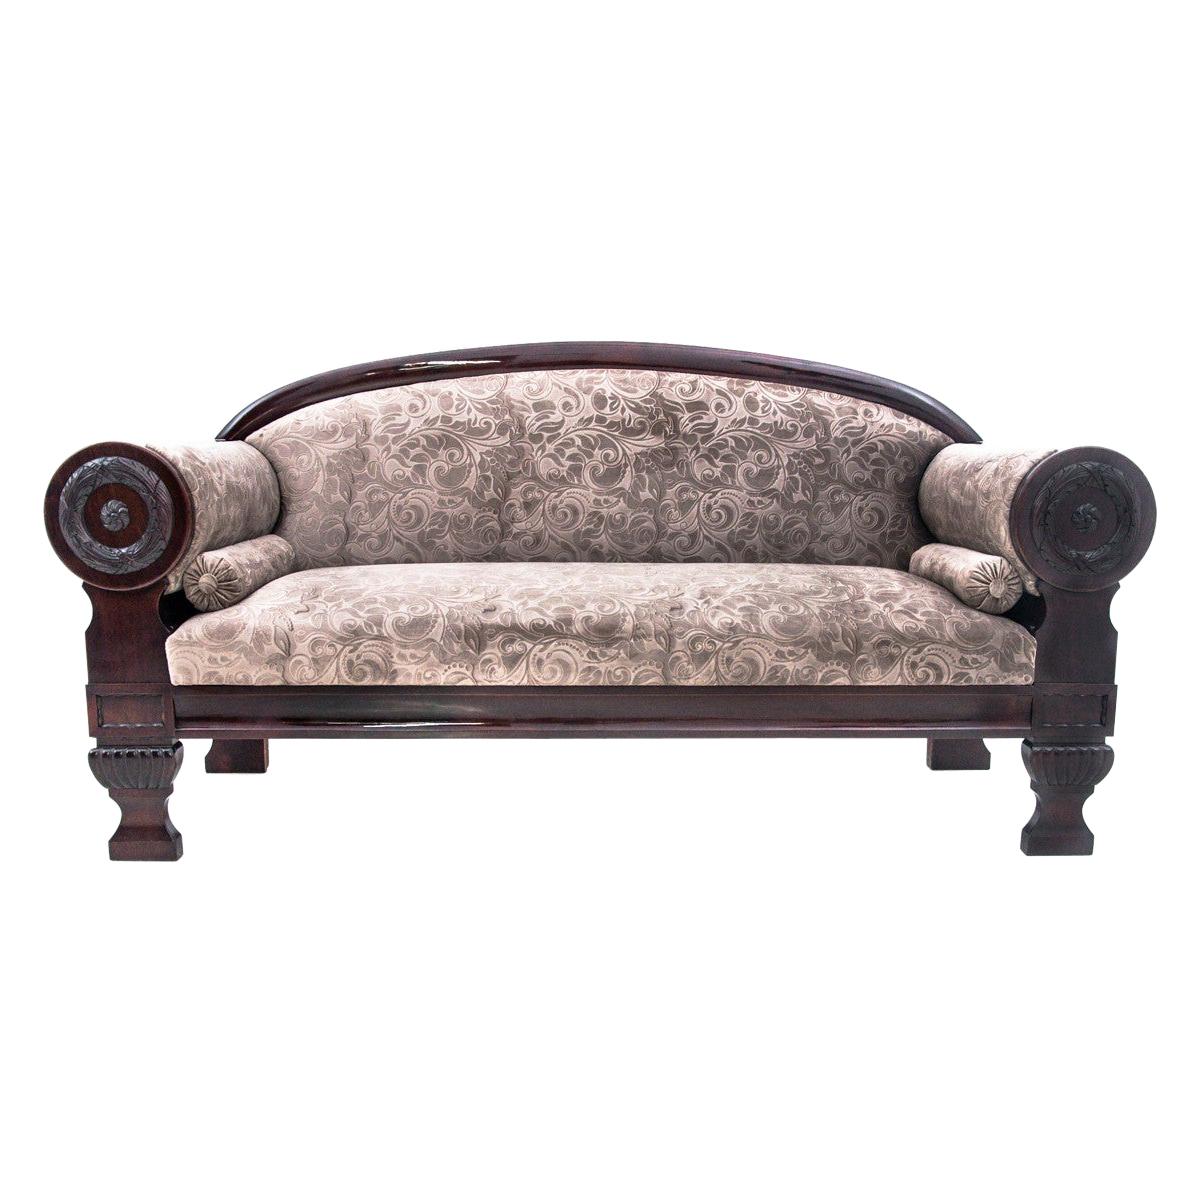 Antique Biedermeier sofa, Northern Europe, circa 1920. Renovated.